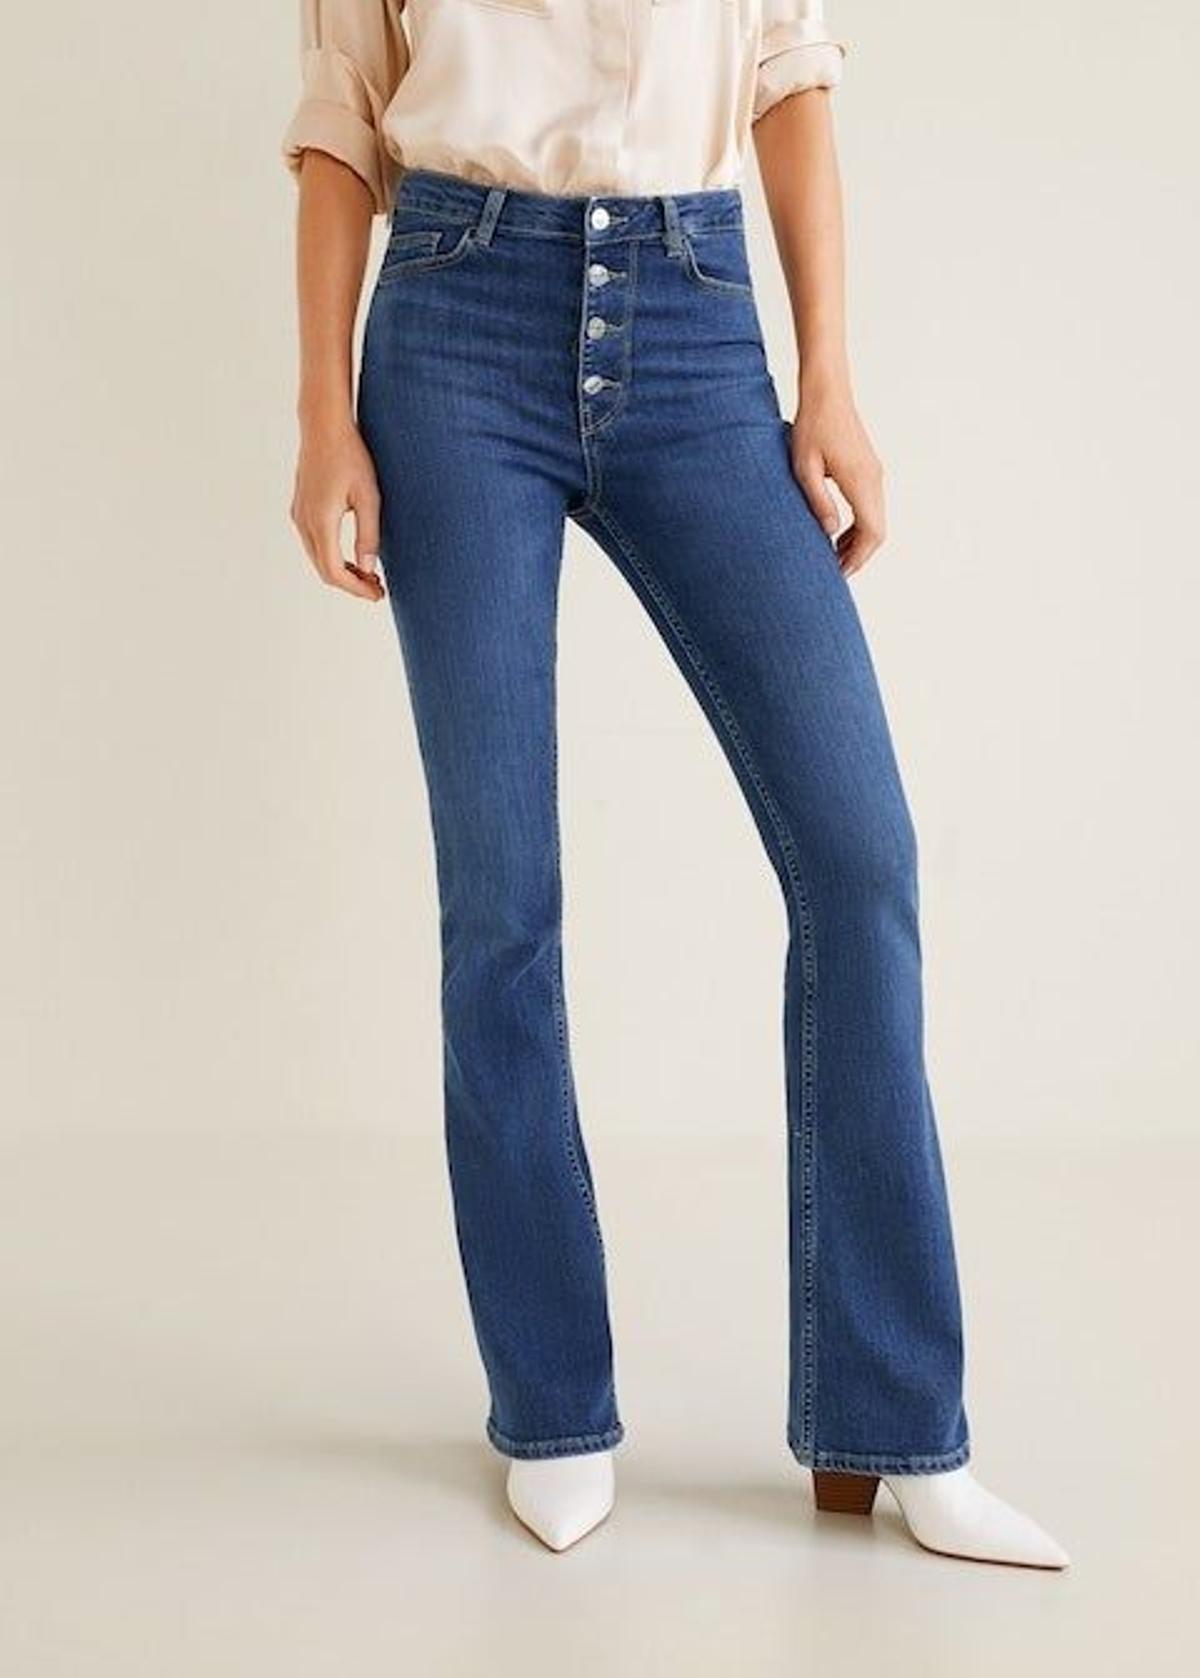 Jeans flare high waist (27,99 €)